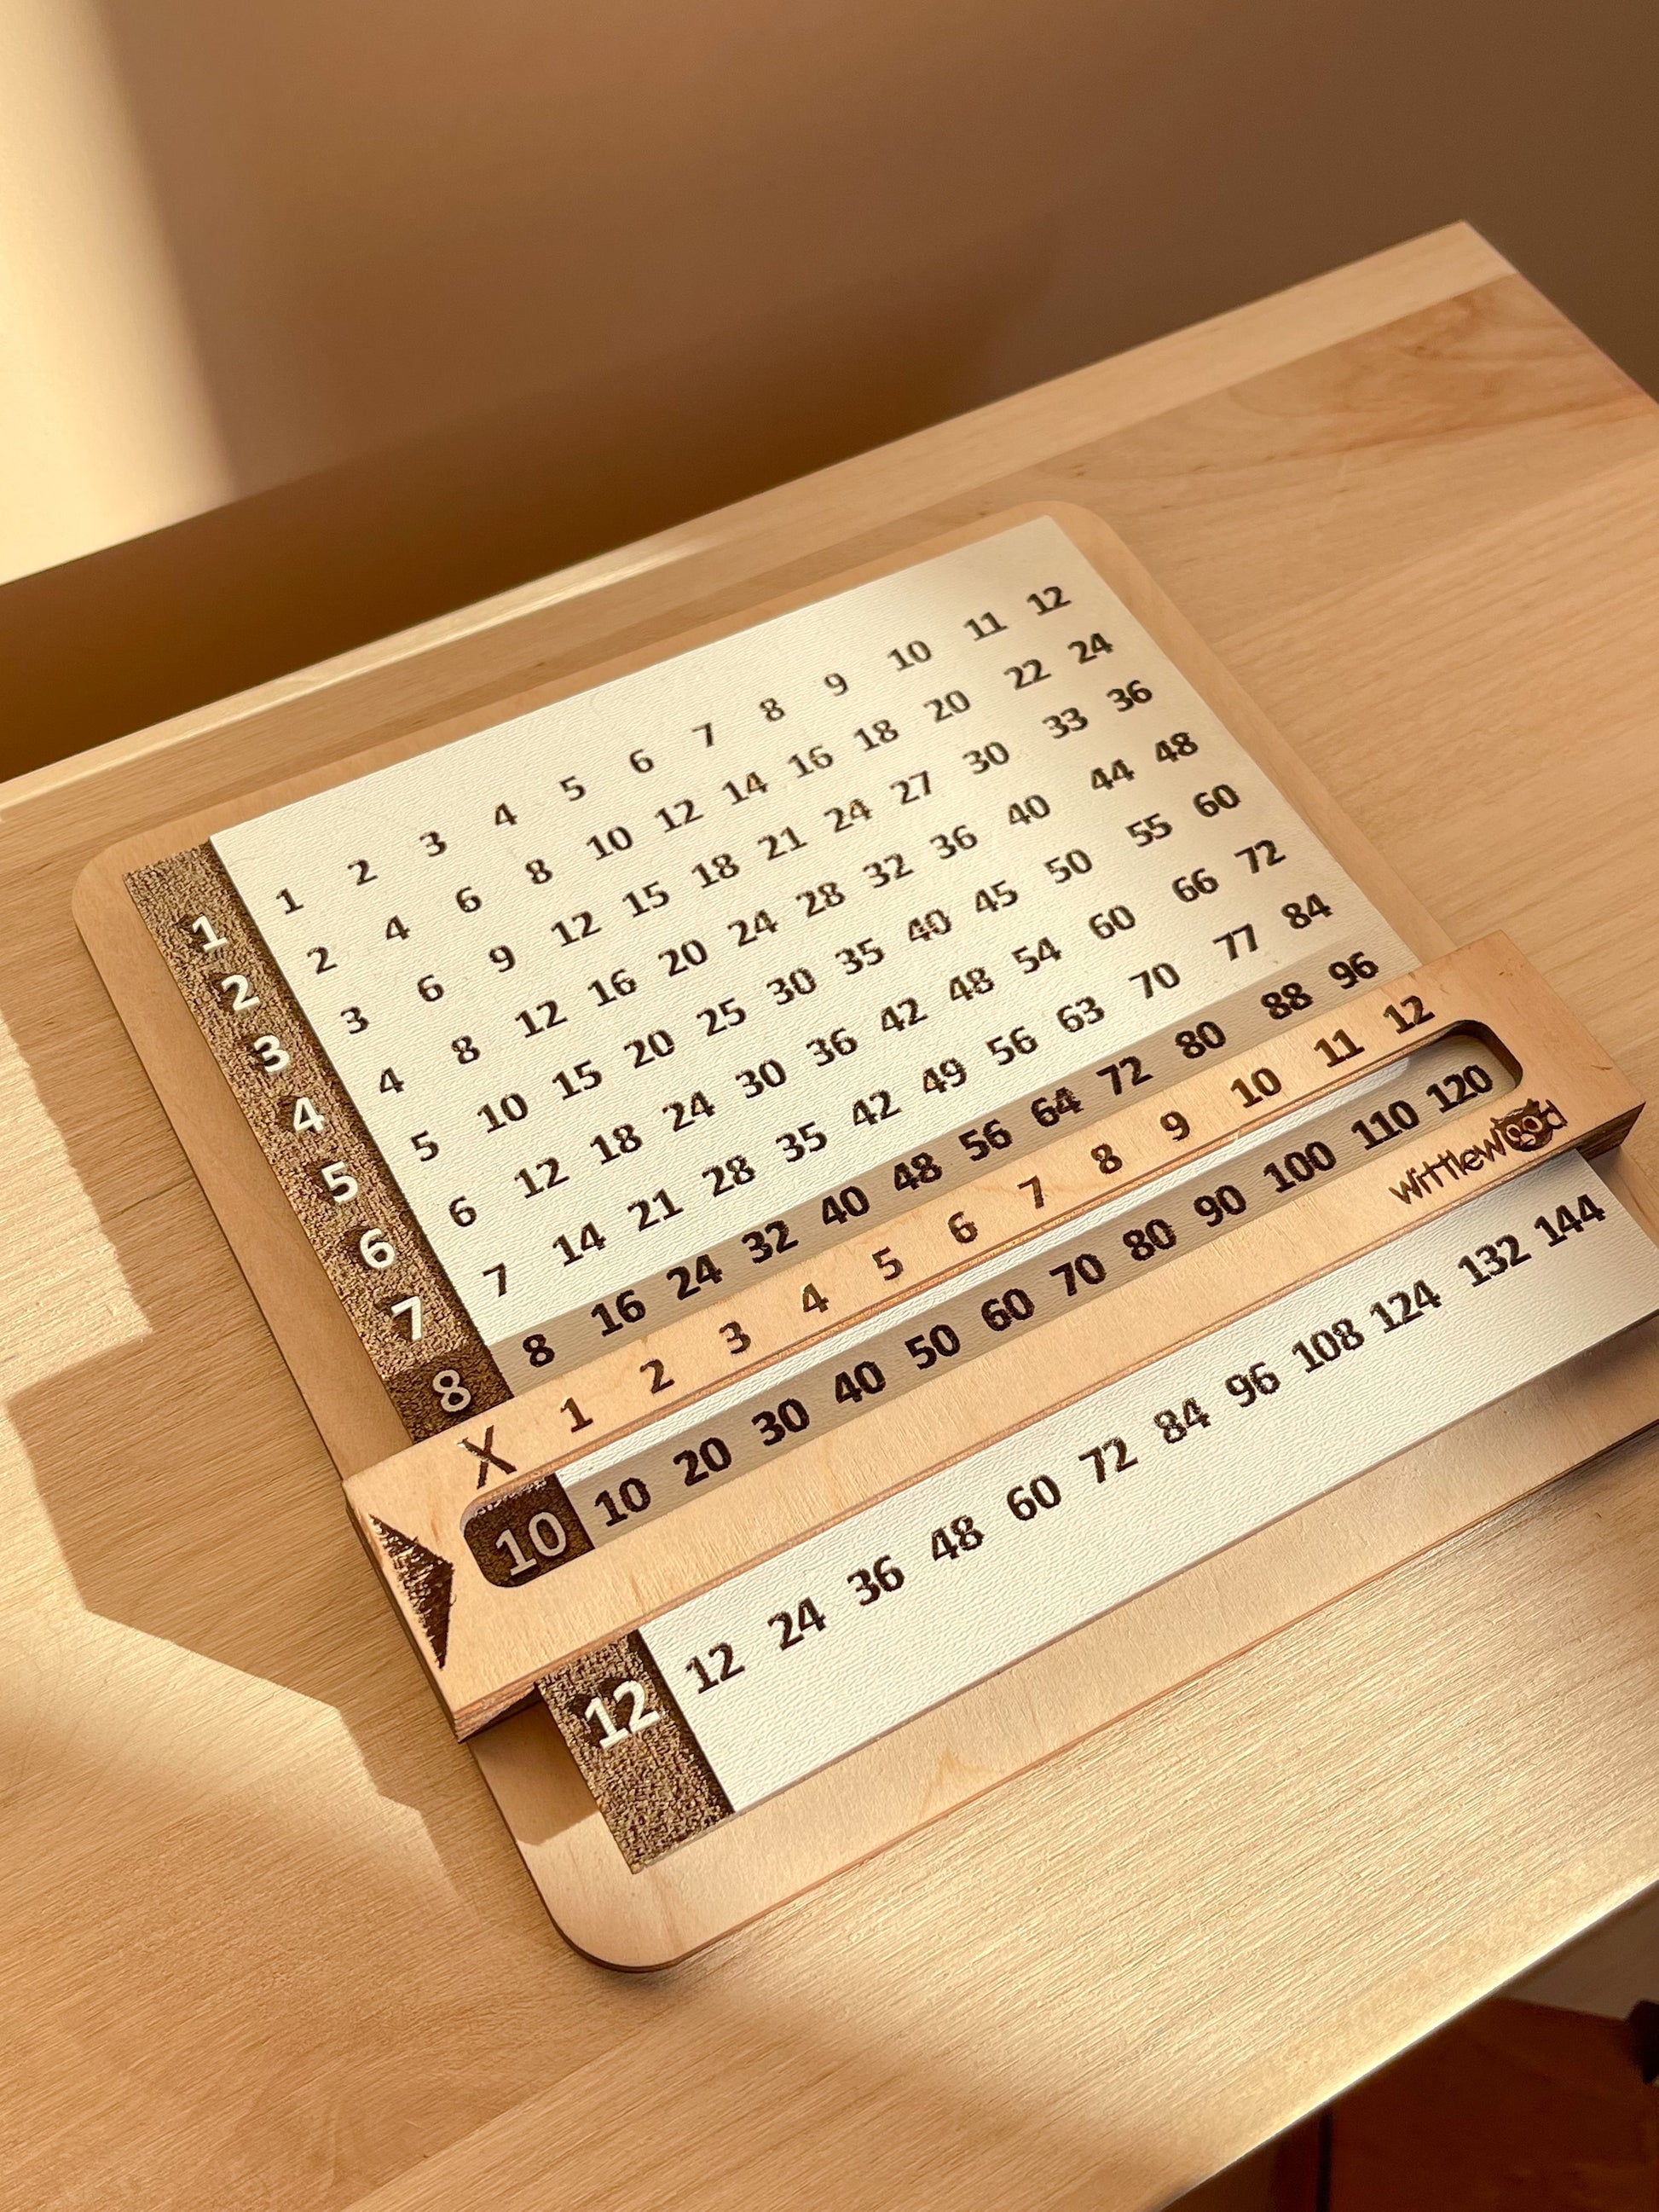 Sudoku Value Pack - 32/40